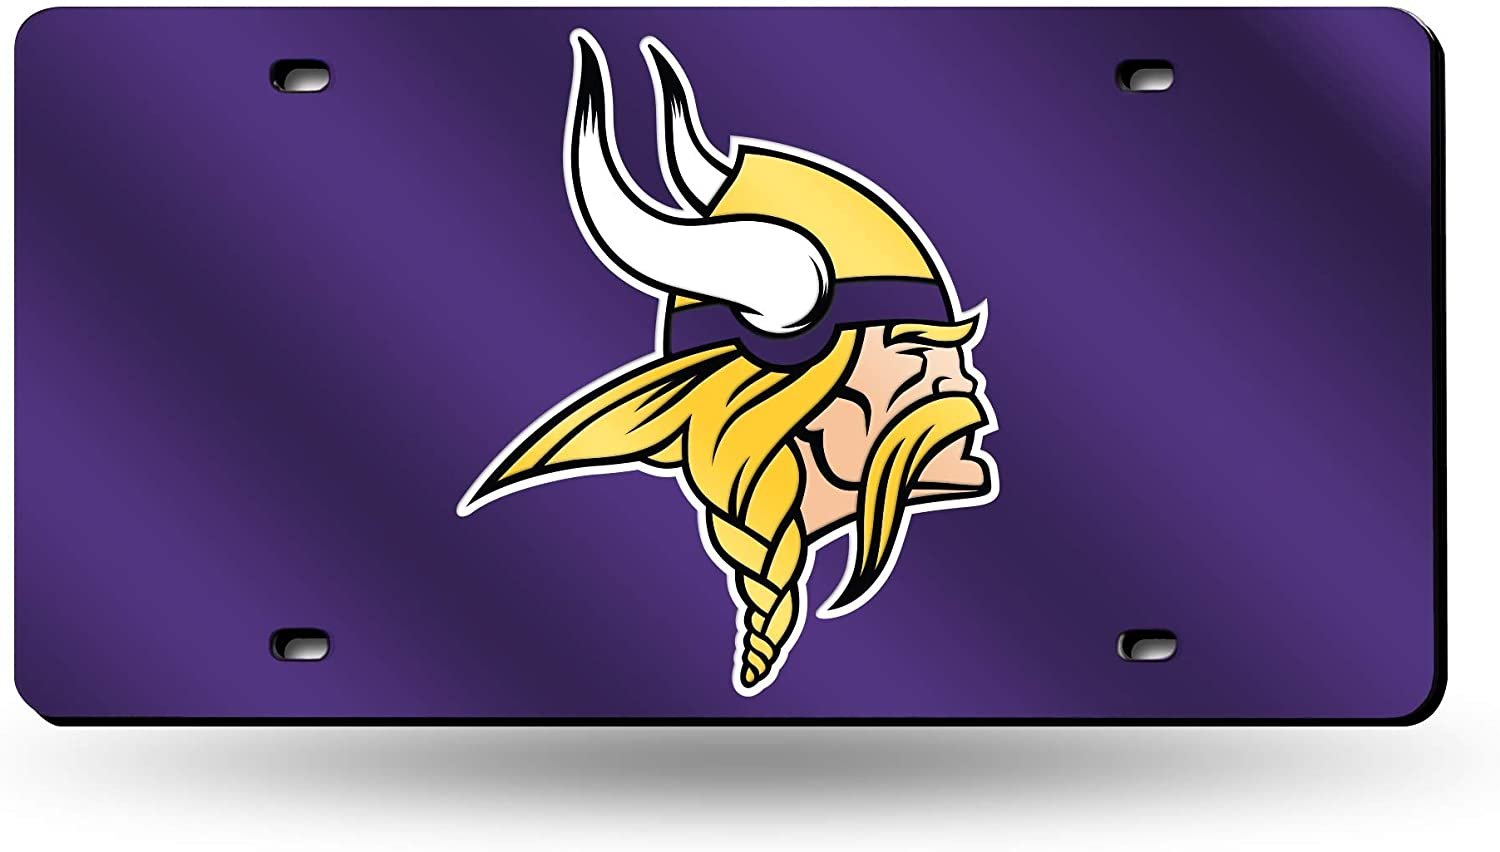 Minnesota Vikings Premium Laser Cut Tag License Plate, Purple Mirrored Acrylic Inlaid, 12x6 Inch